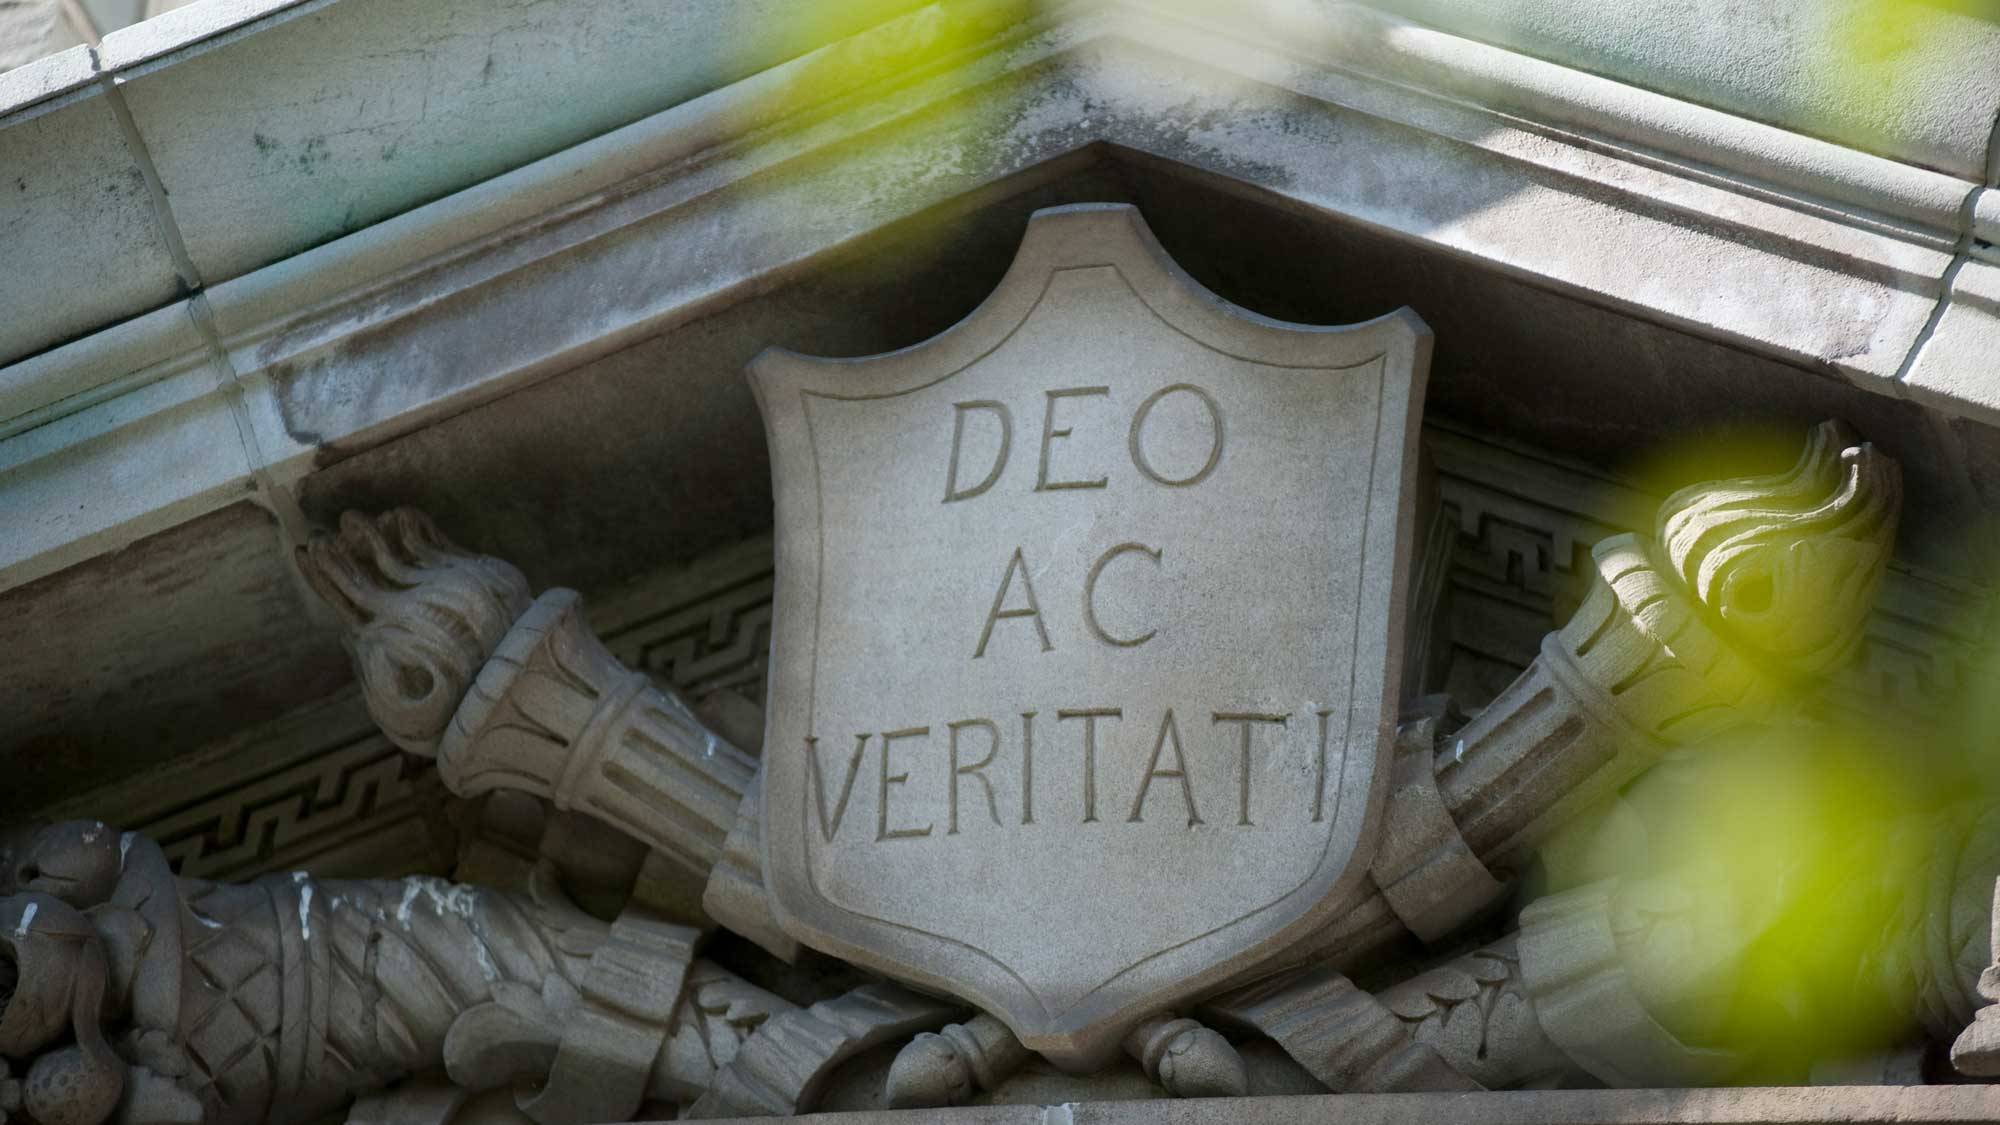 Deo Ac Veritati carved on shield